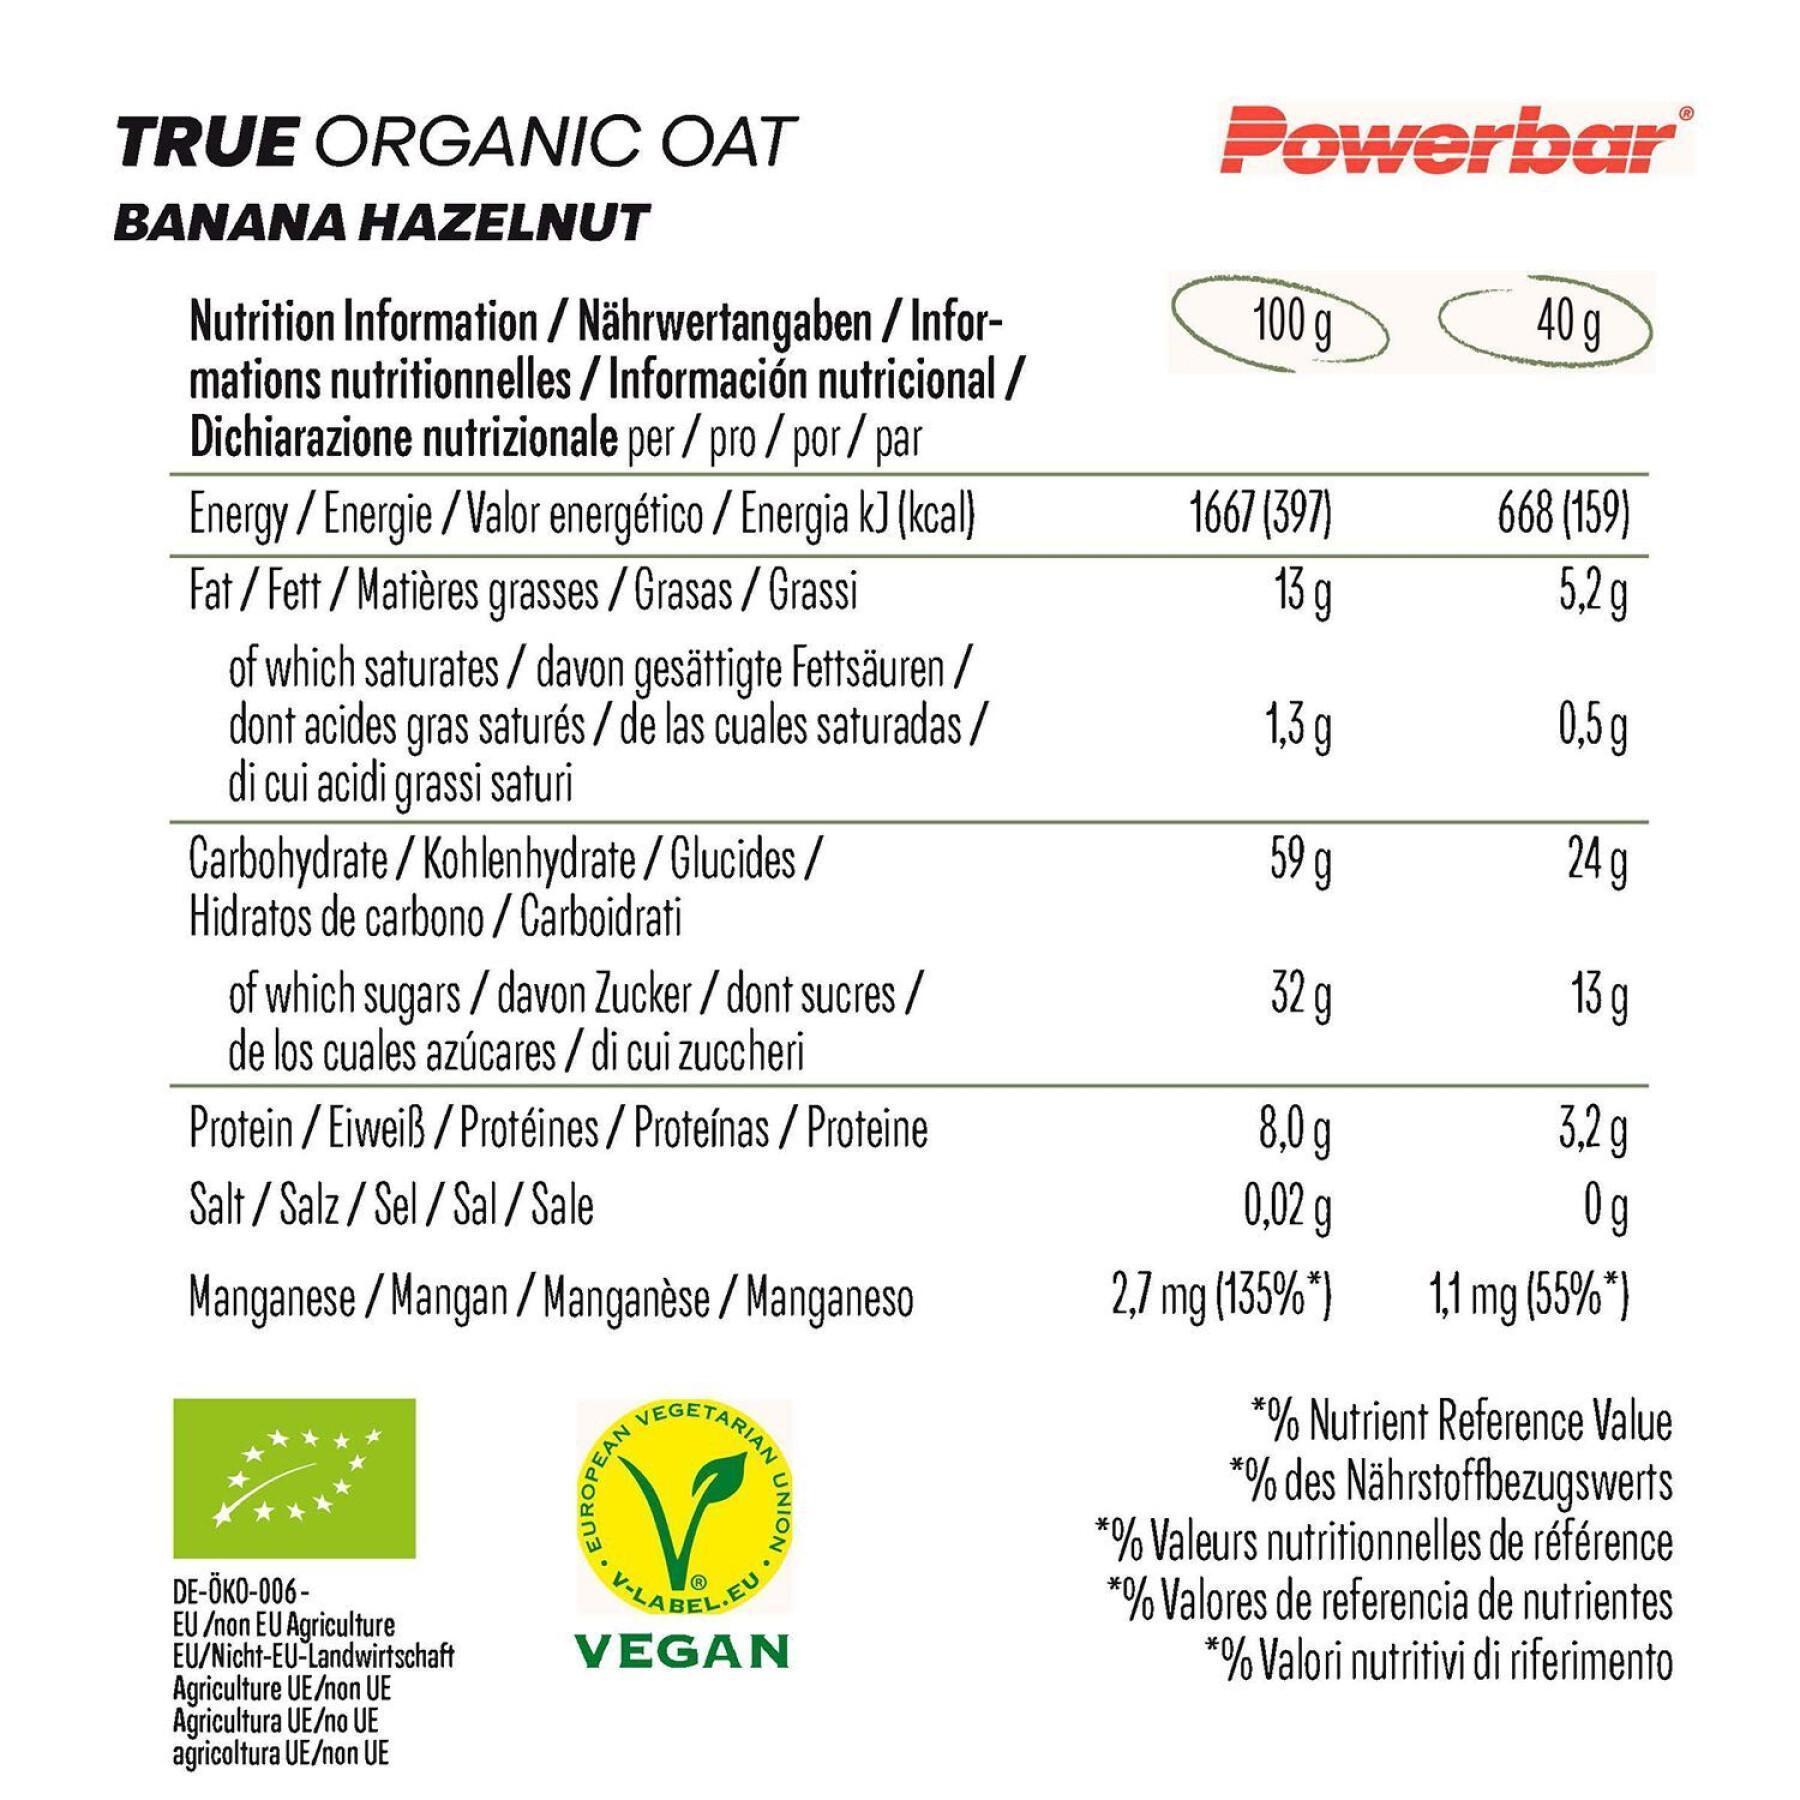 Pack of 16 nutrition bars PowerBar True Organic Oat